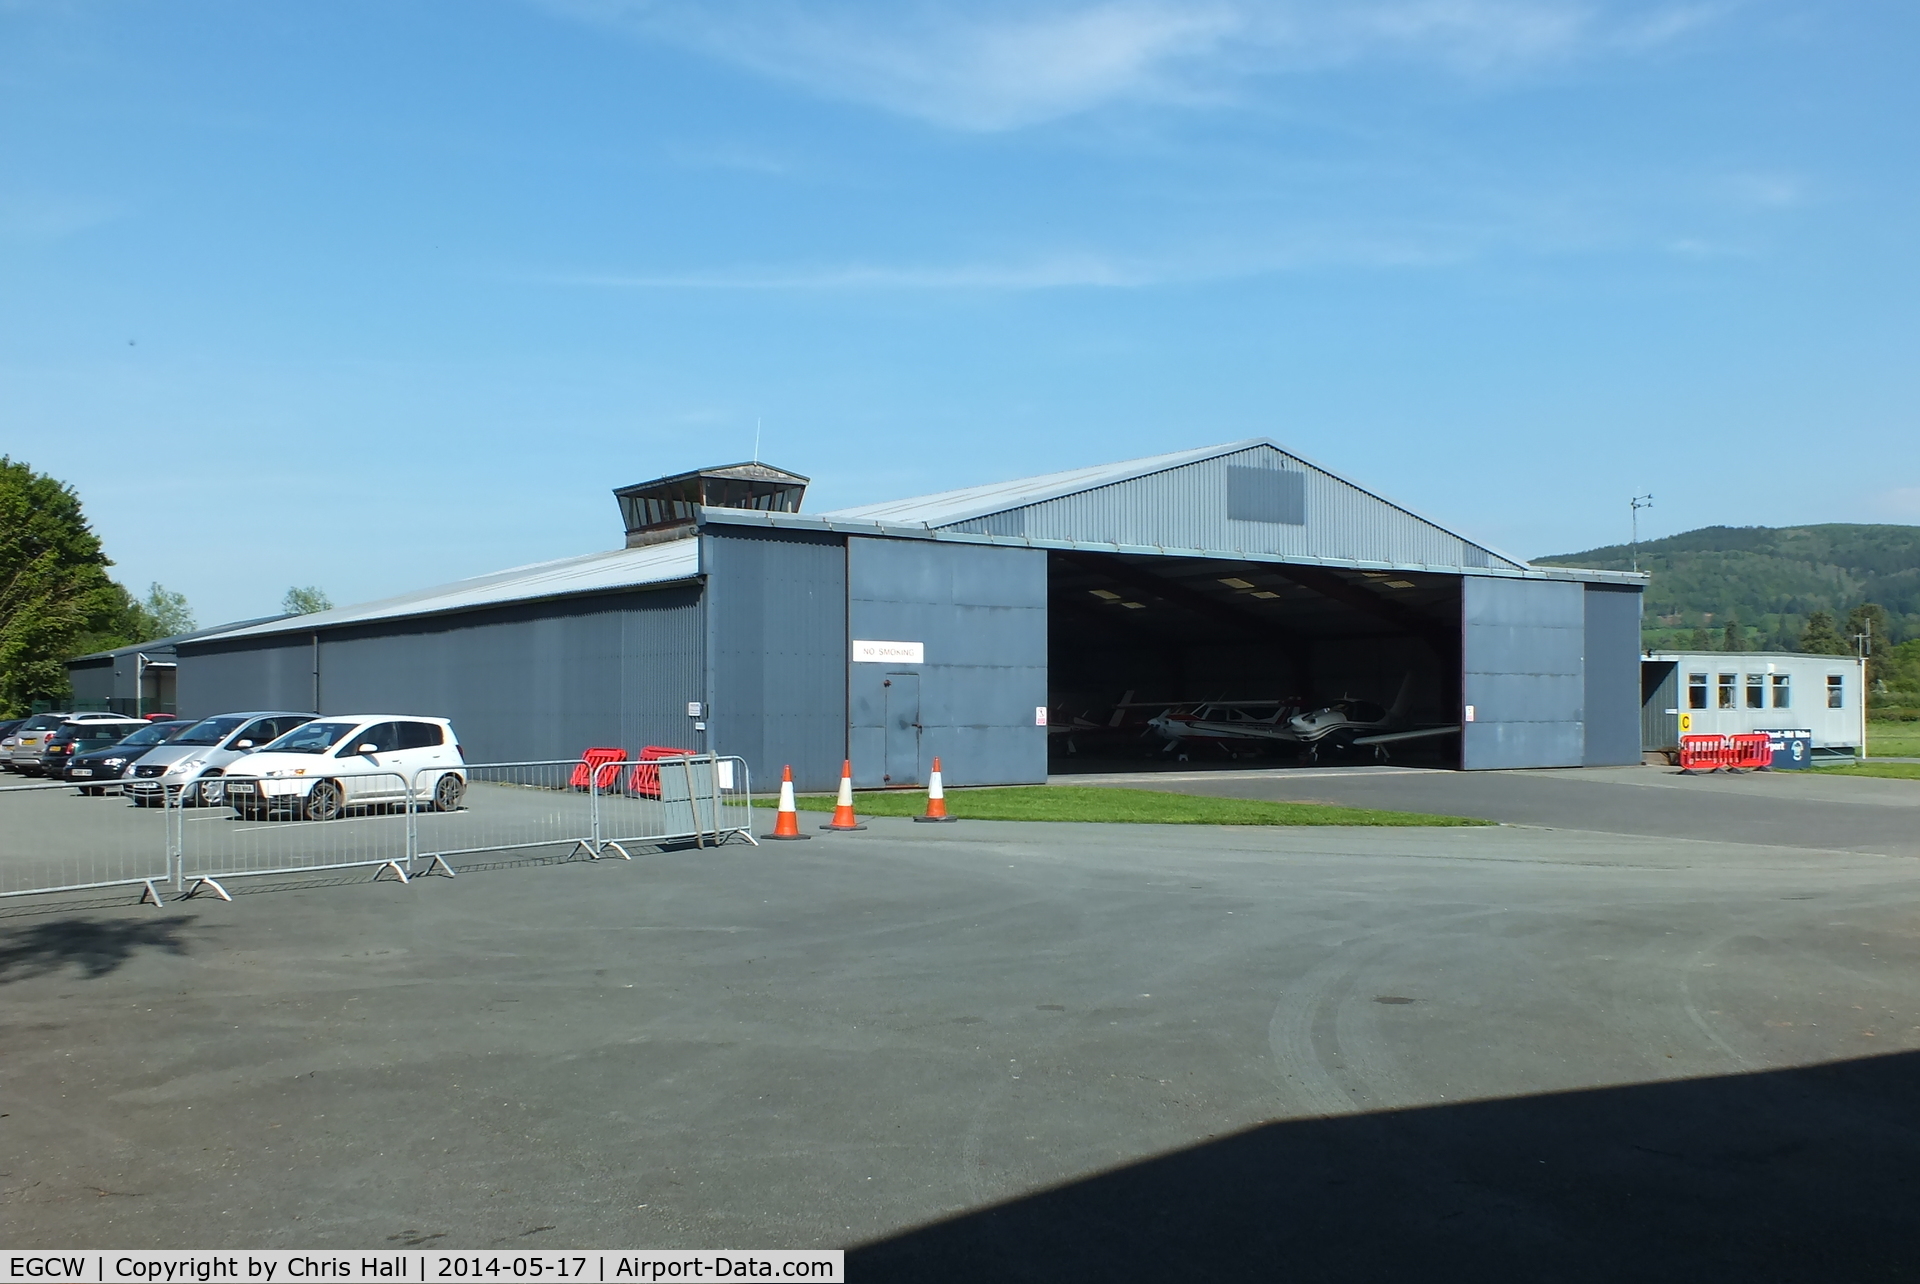 Welshpool Airport, Welshpool, Wales United Kingdom (EGCW) - Welshpool Airport